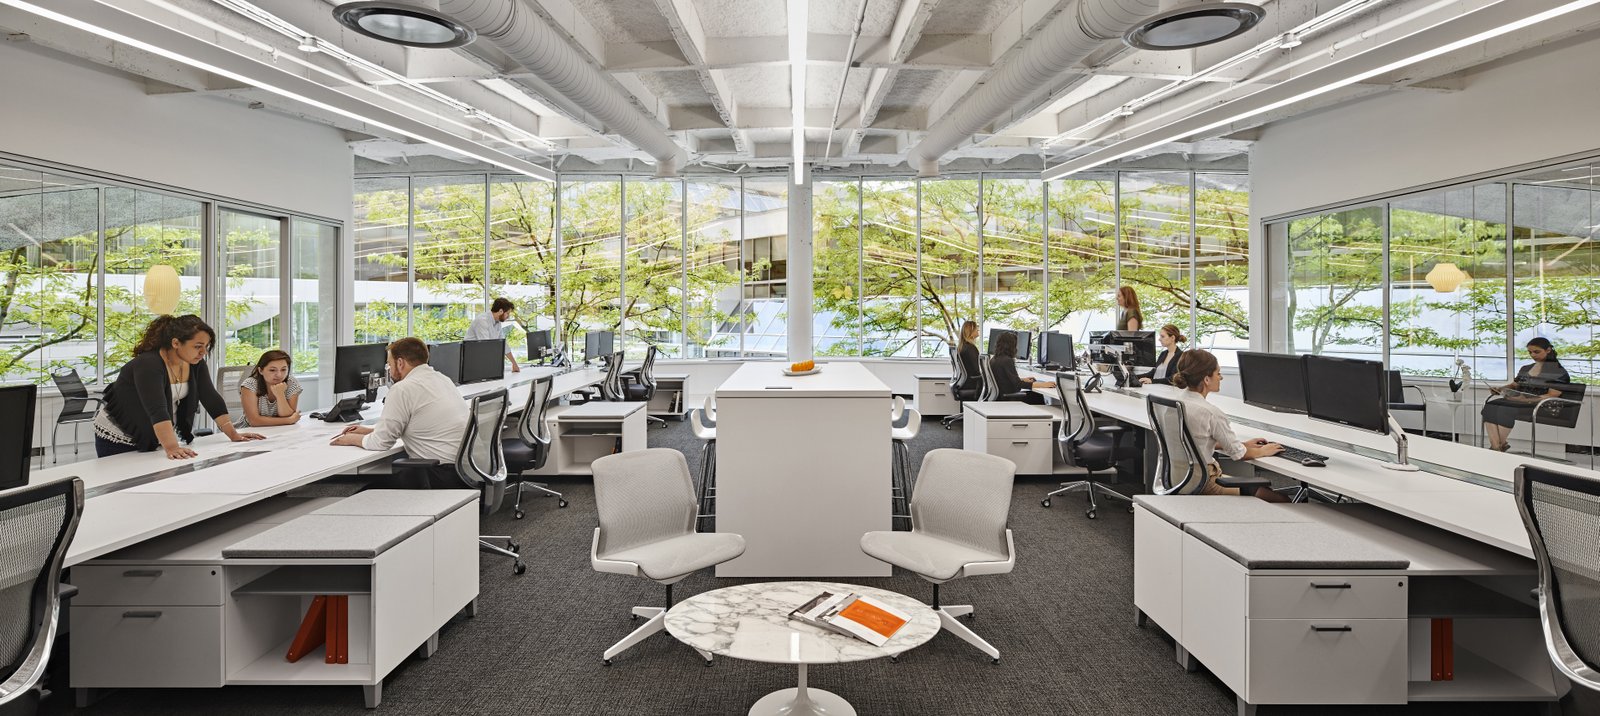 amenta emma architects office ceiling design idea